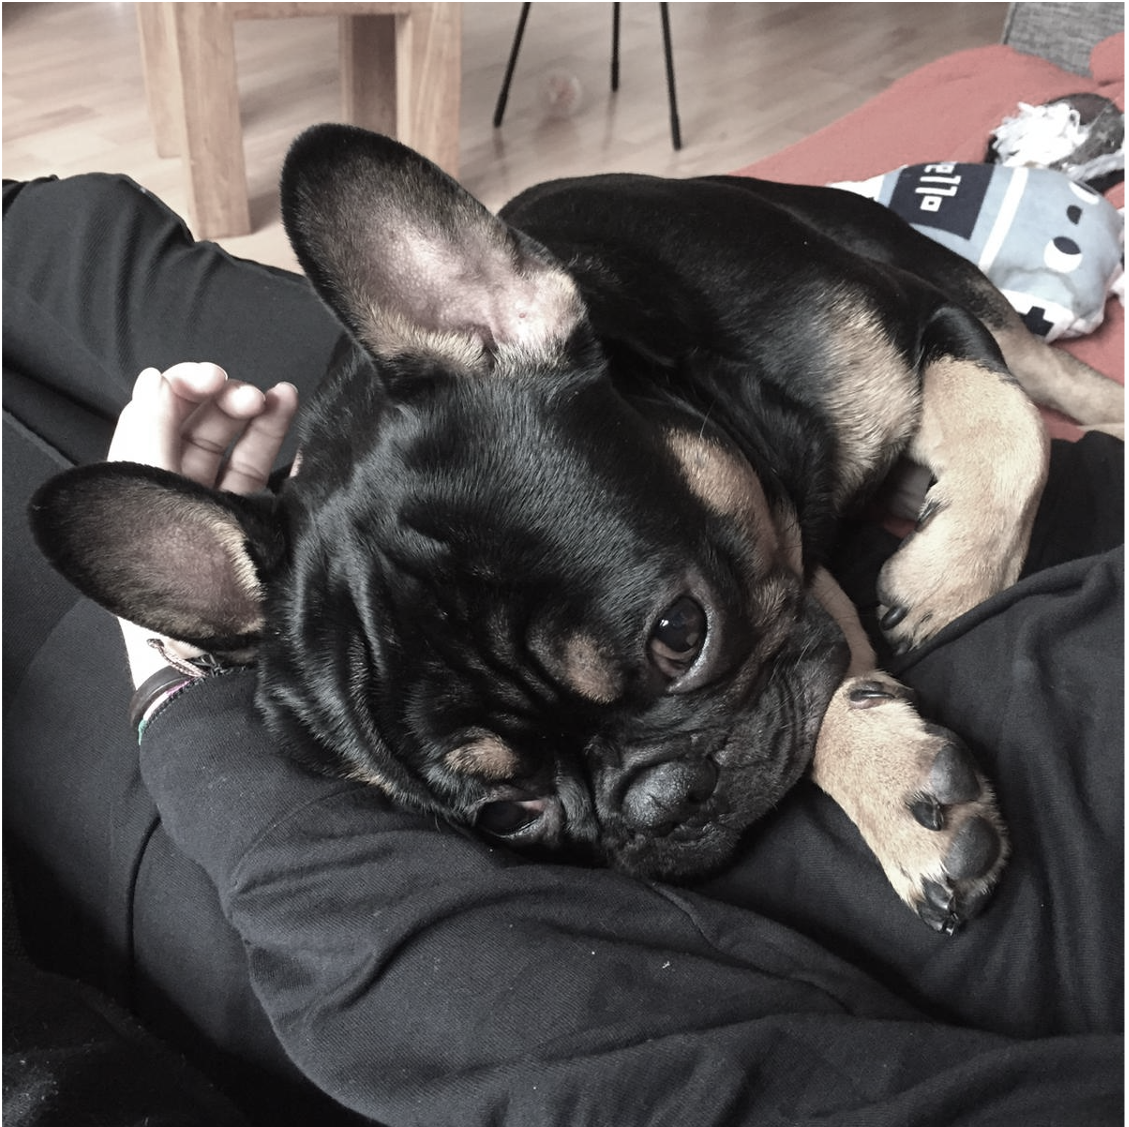 Ralph cuddling on someone's lap